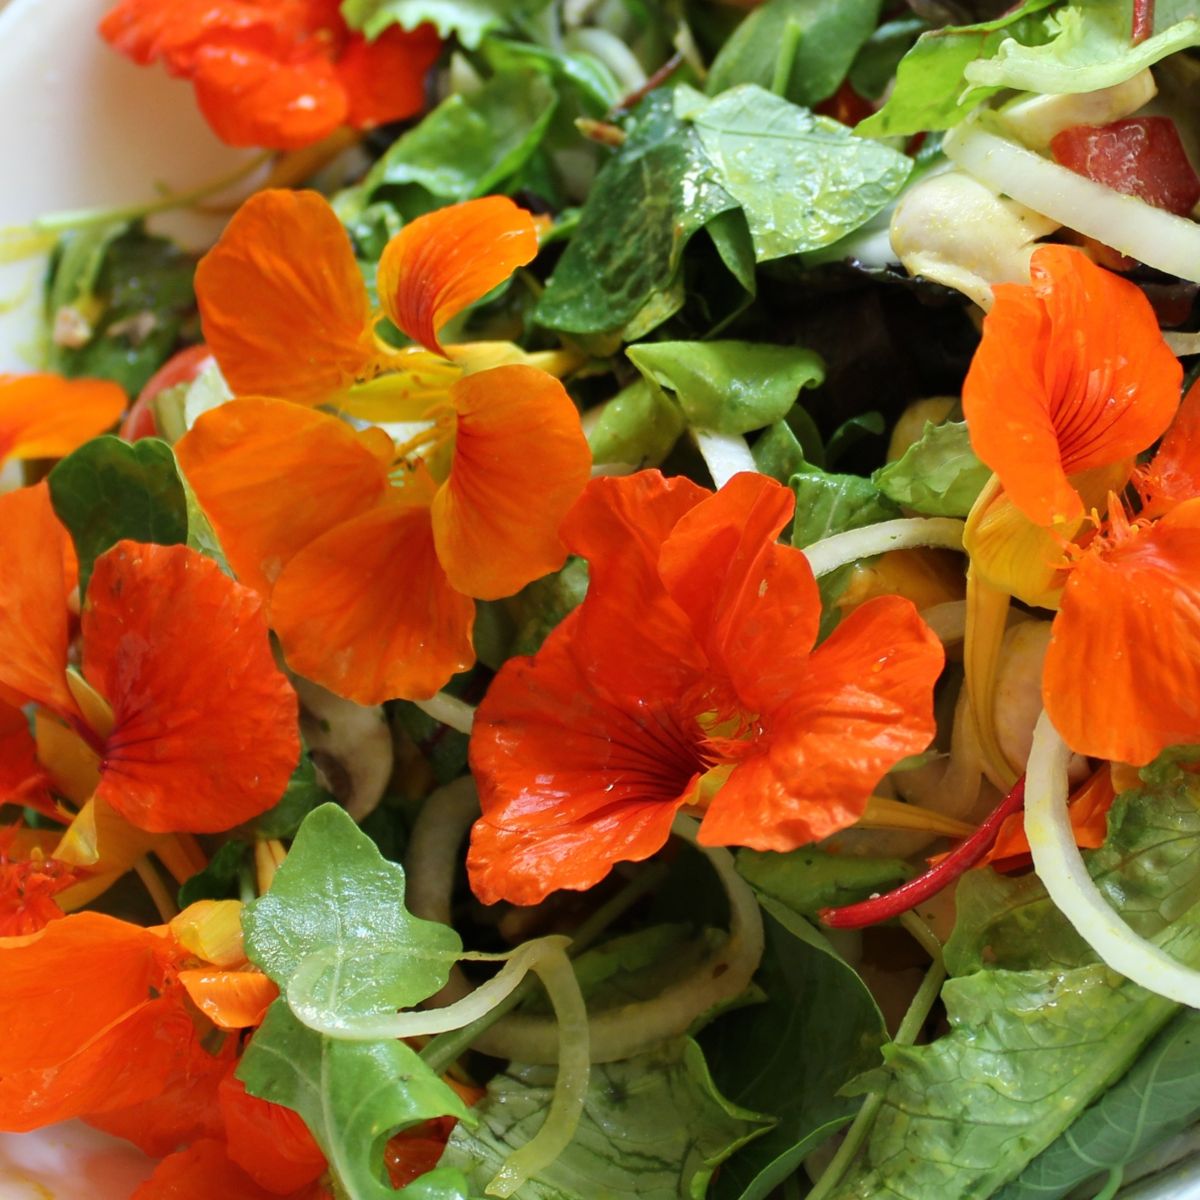 nasturtium flowers added to a green salad